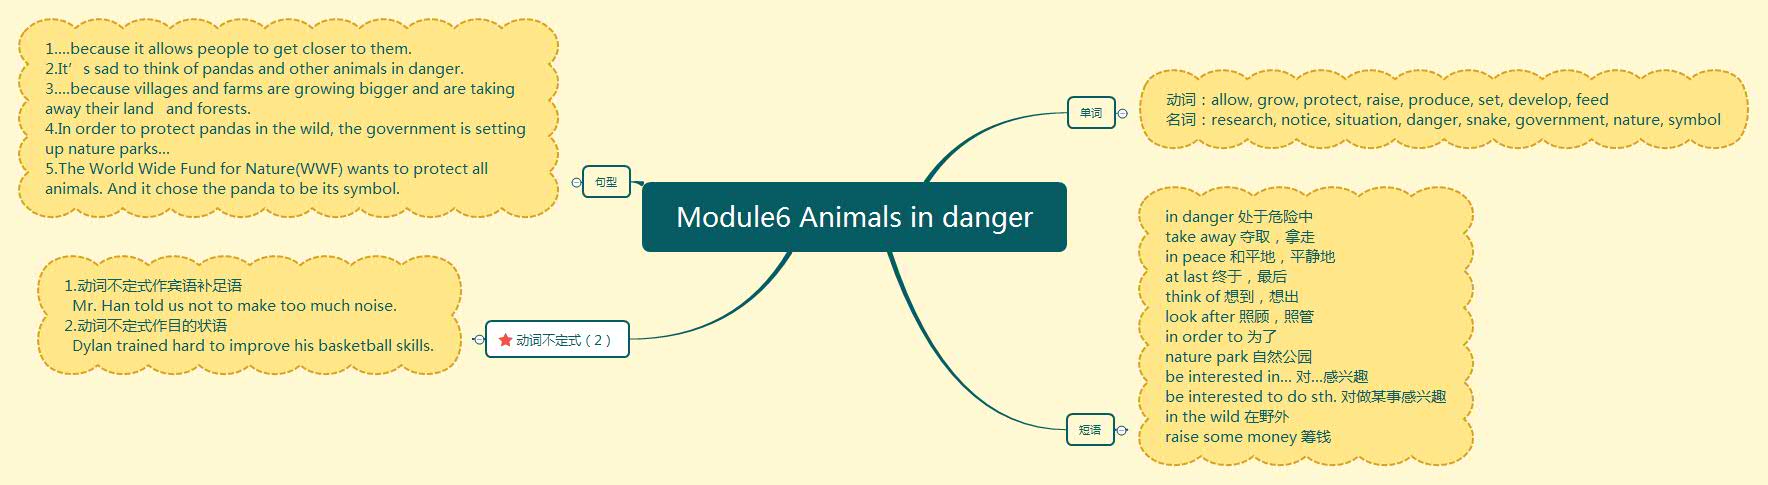 Module6 Animals in danger.jpg